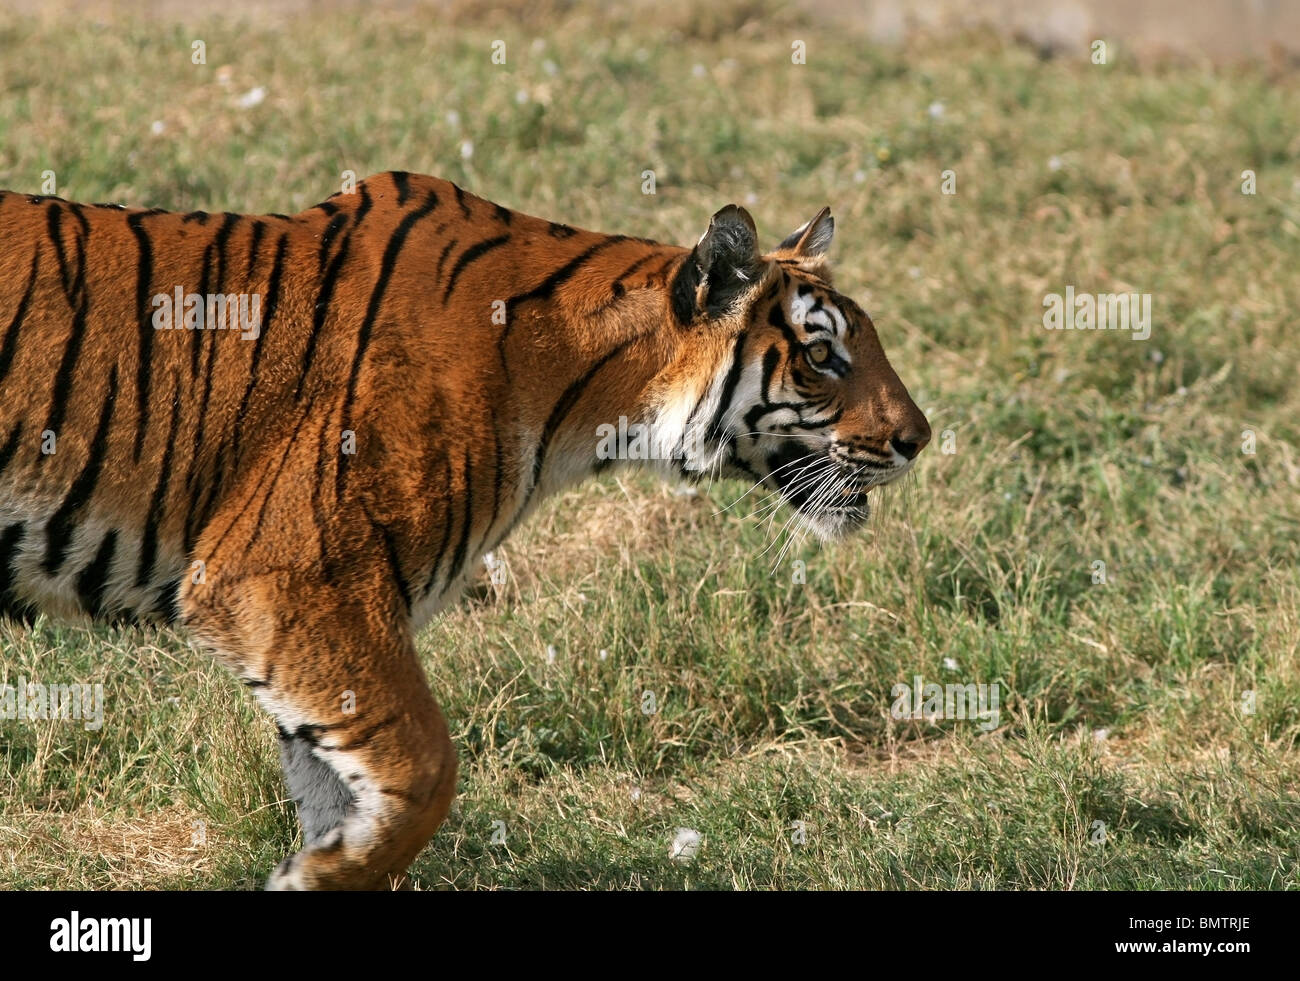 Alert Tiger walking inside it's enclosure in New Delhi Zoo, India Stock Photo